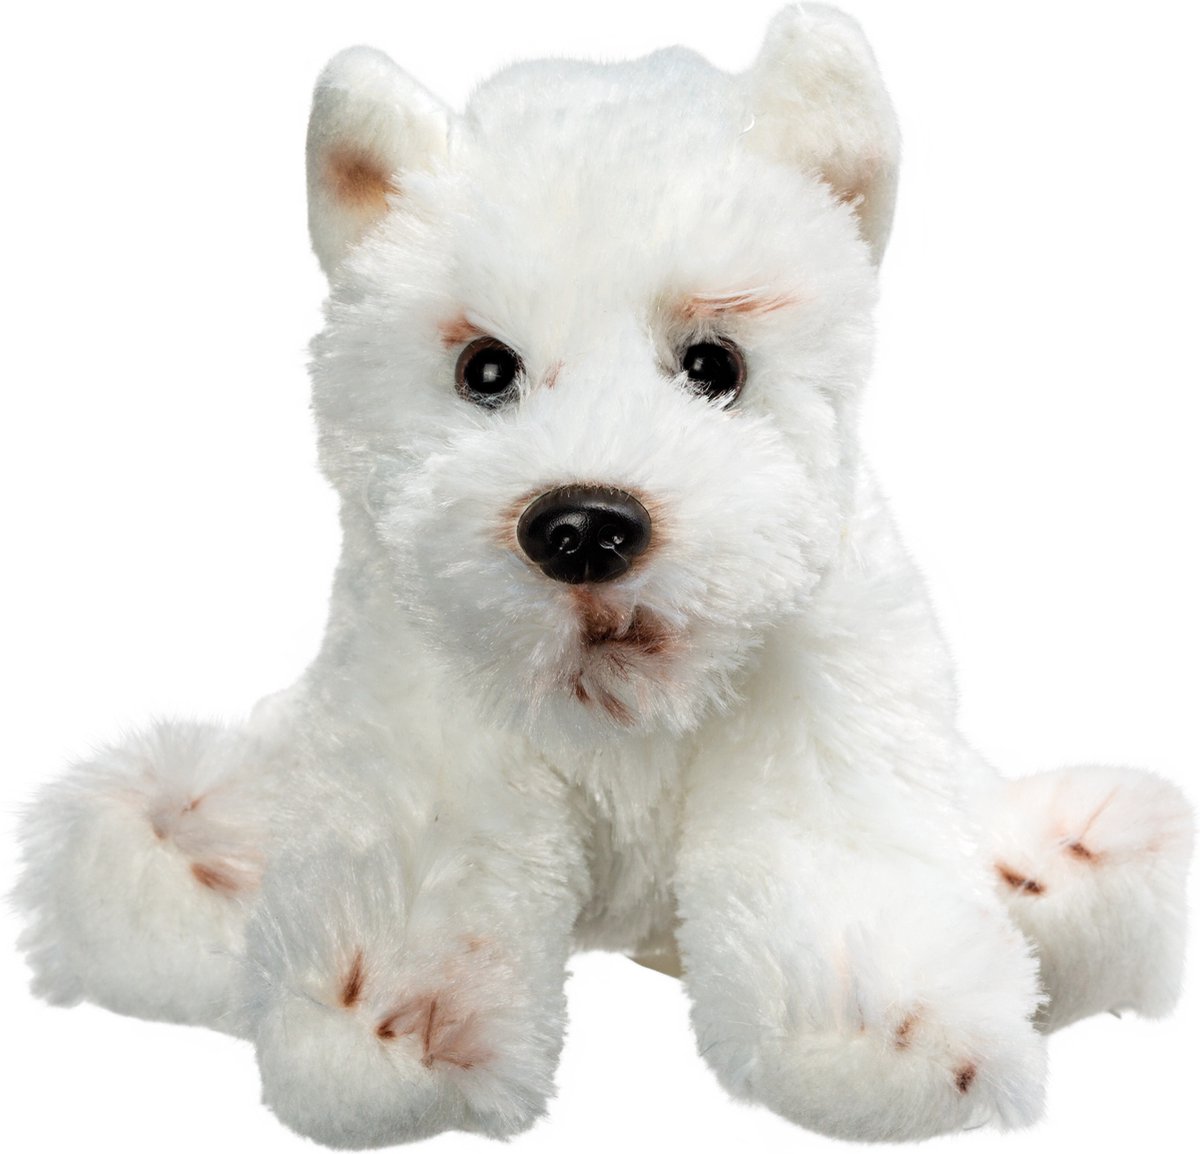 Pluche knuffel dieren West Highland Terrier/Westie hond 13 cm - Speelgoed knuffelbeesten - Honden soorten